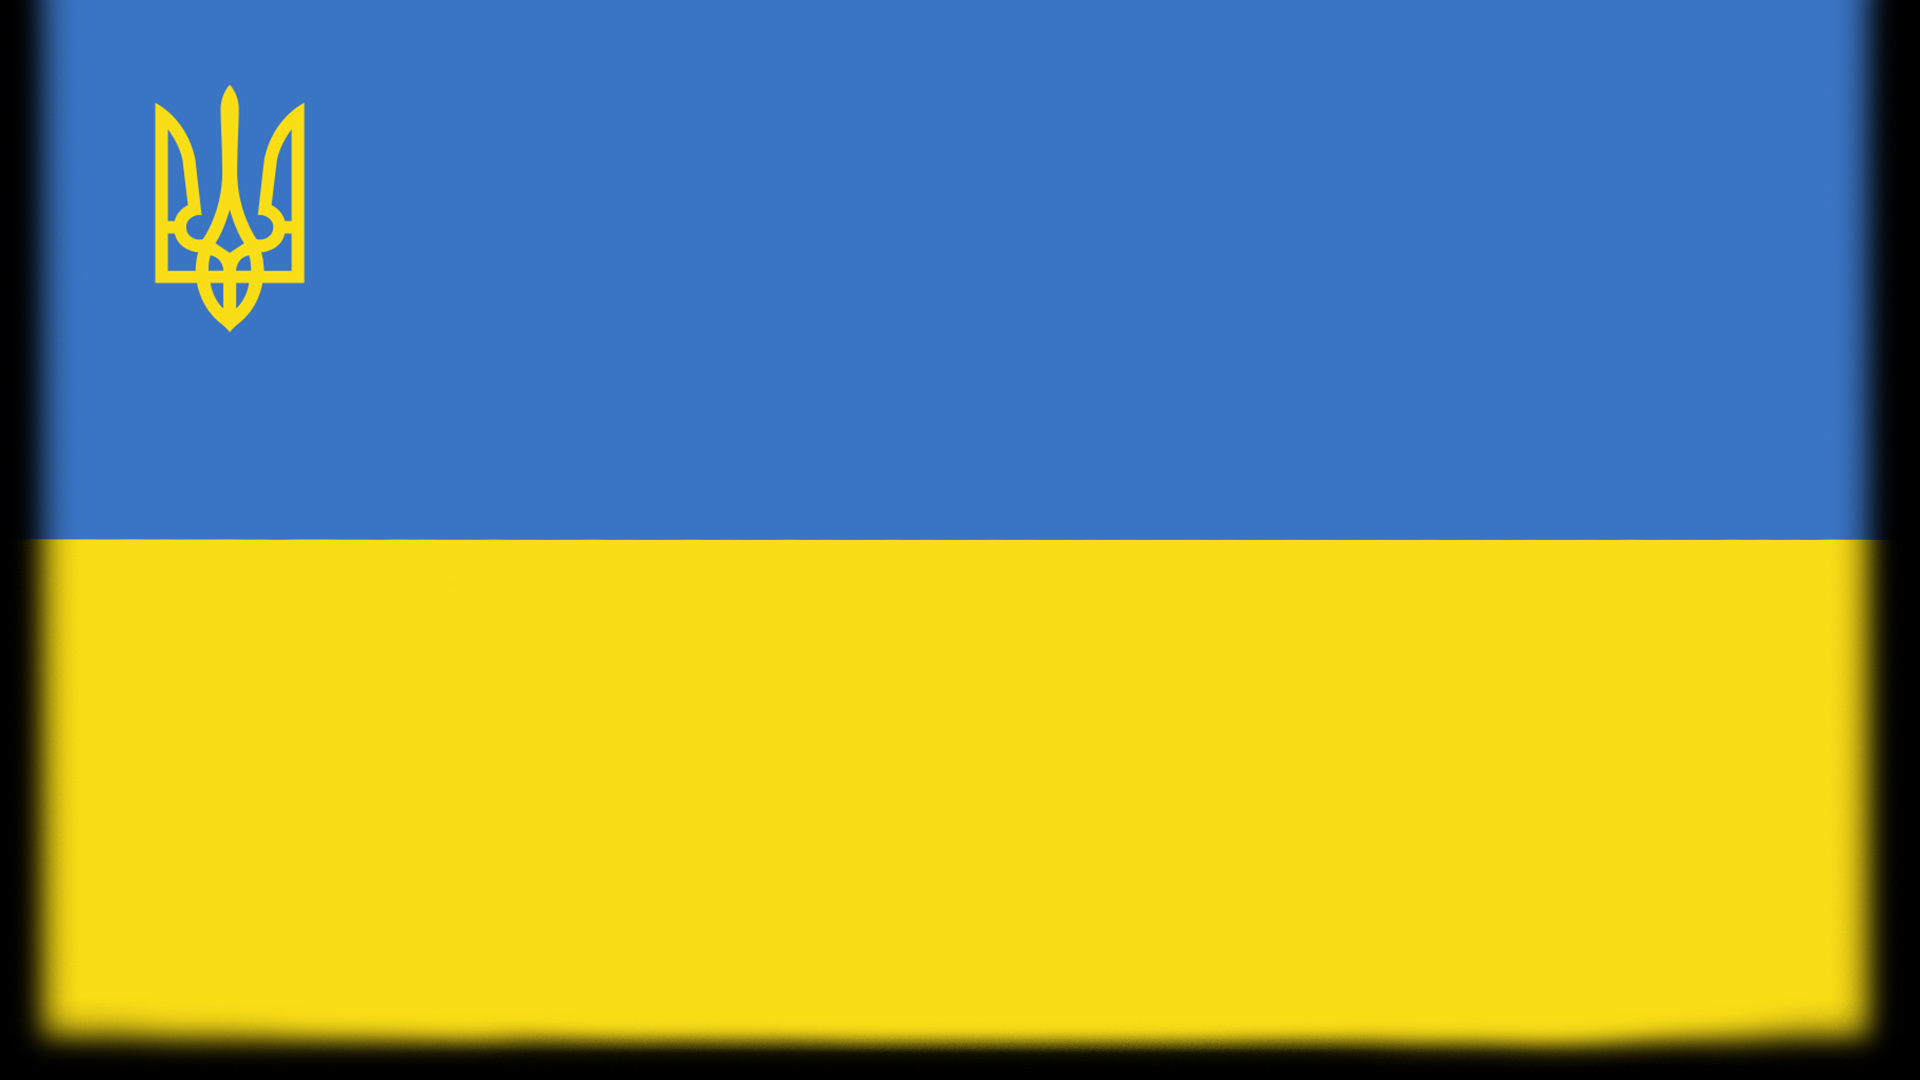 Rotary International statement on Ukraine conflict | Rotary Club of ...